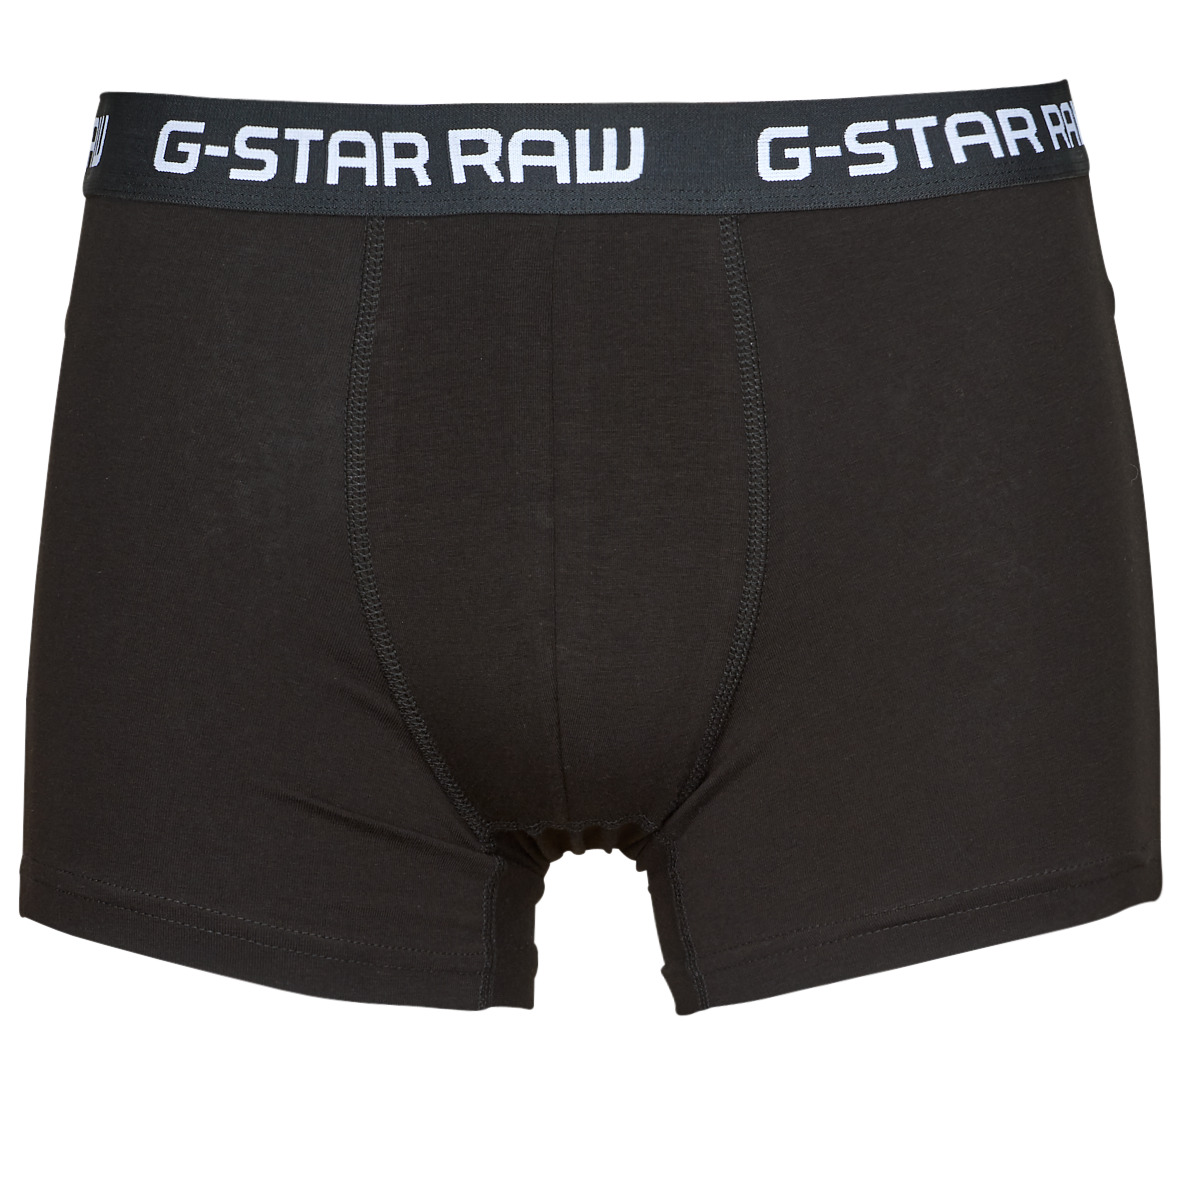 G-Star Raw Noir CLASSIC TRUNK DmxlUnUt